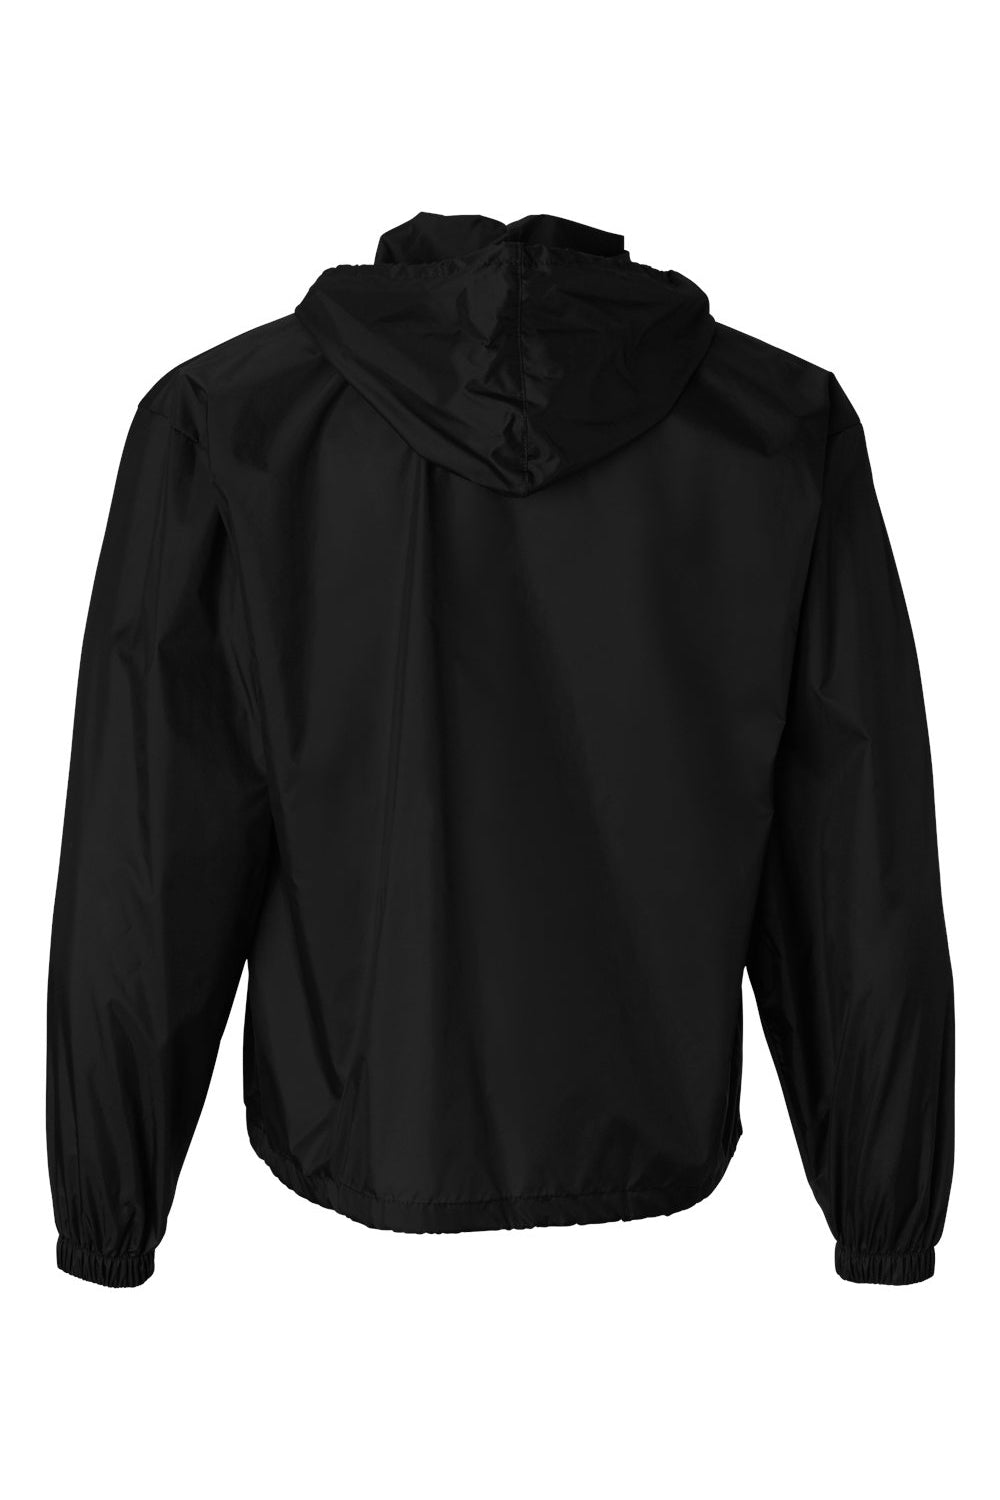 Augusta Sportswear 3130 Mens Packable 1/4 Zip Hooded Jacket Black Flat Back